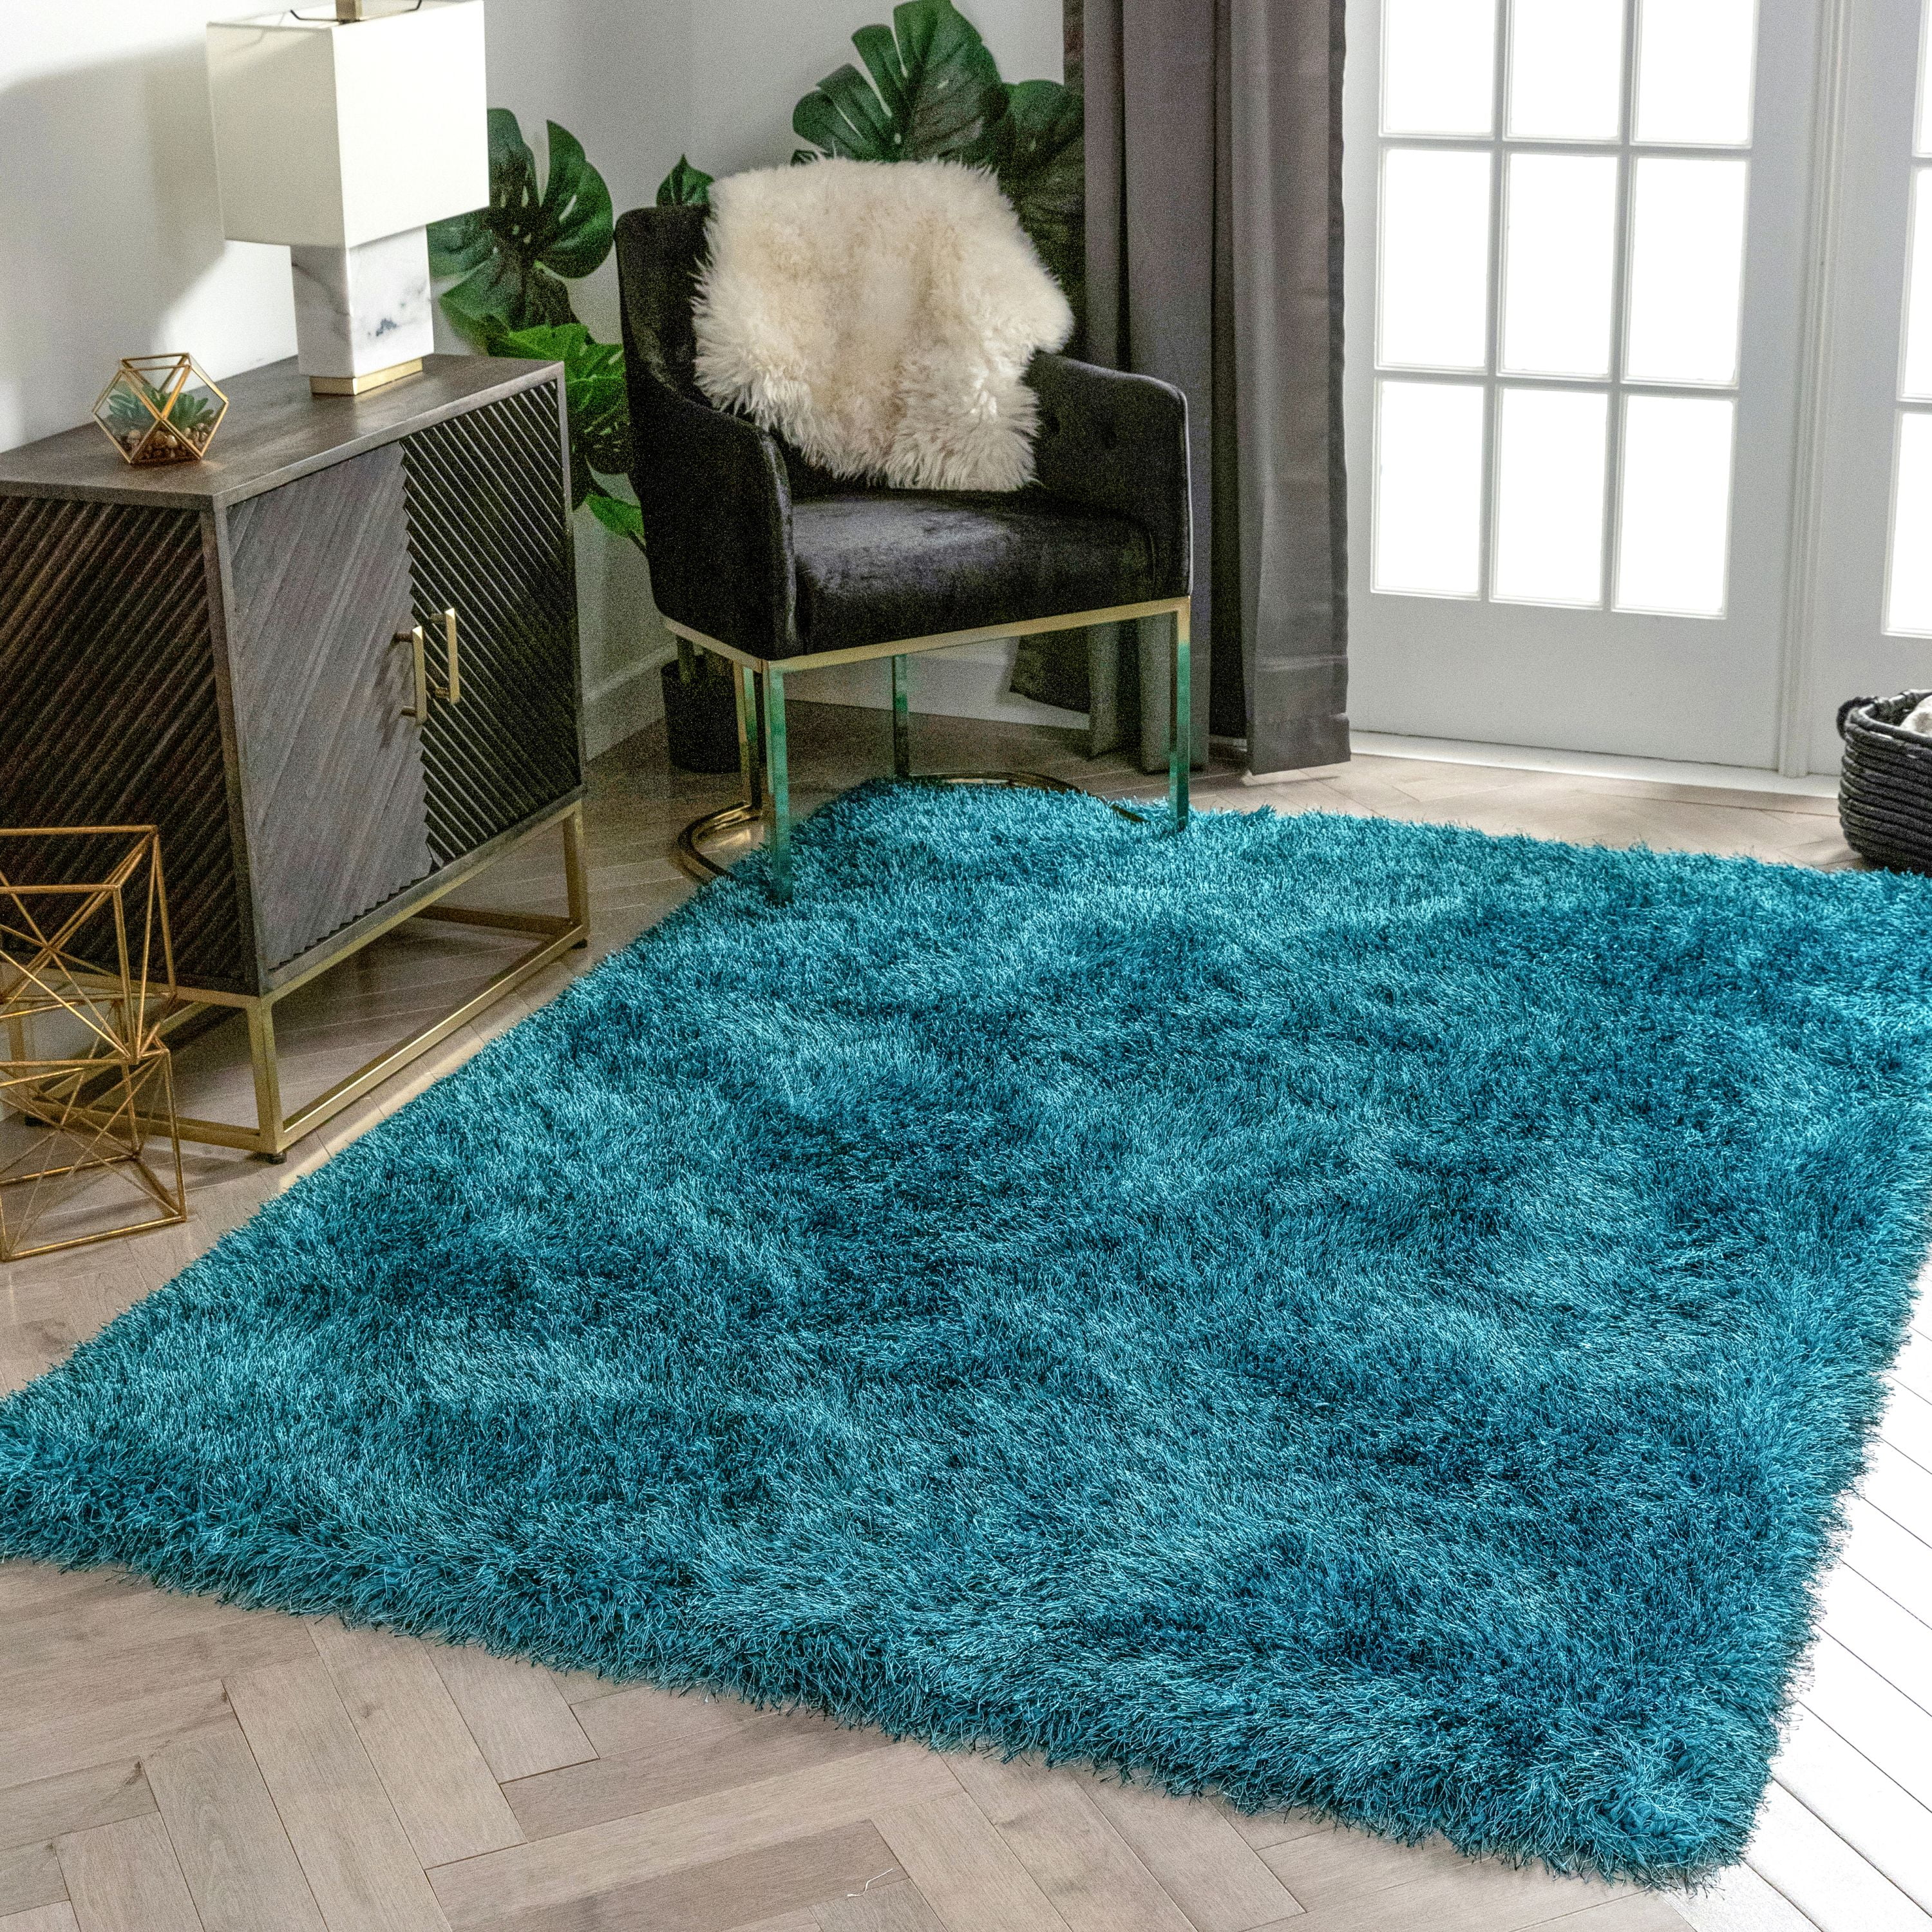 Silky Soft Modern Luxury Home Floor Rug Mat Living Room Bedroom Flooring Teal 